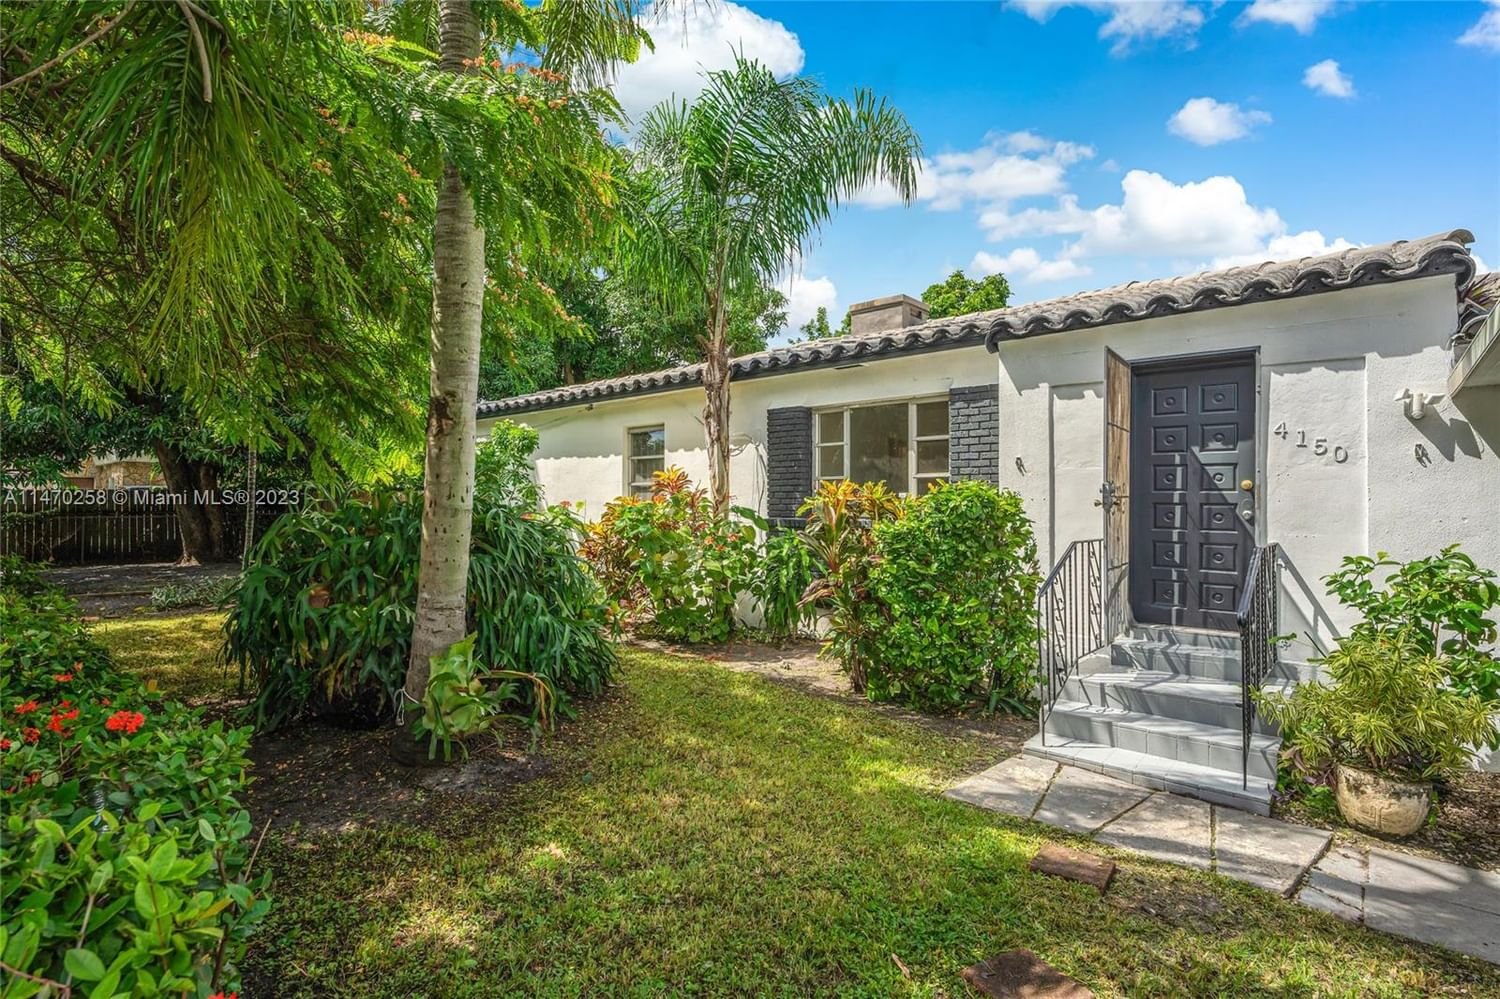 Real estate property located at 4150 10th Ave, Miami-Dade County, DURHAM VILLAGE, Miami, FL